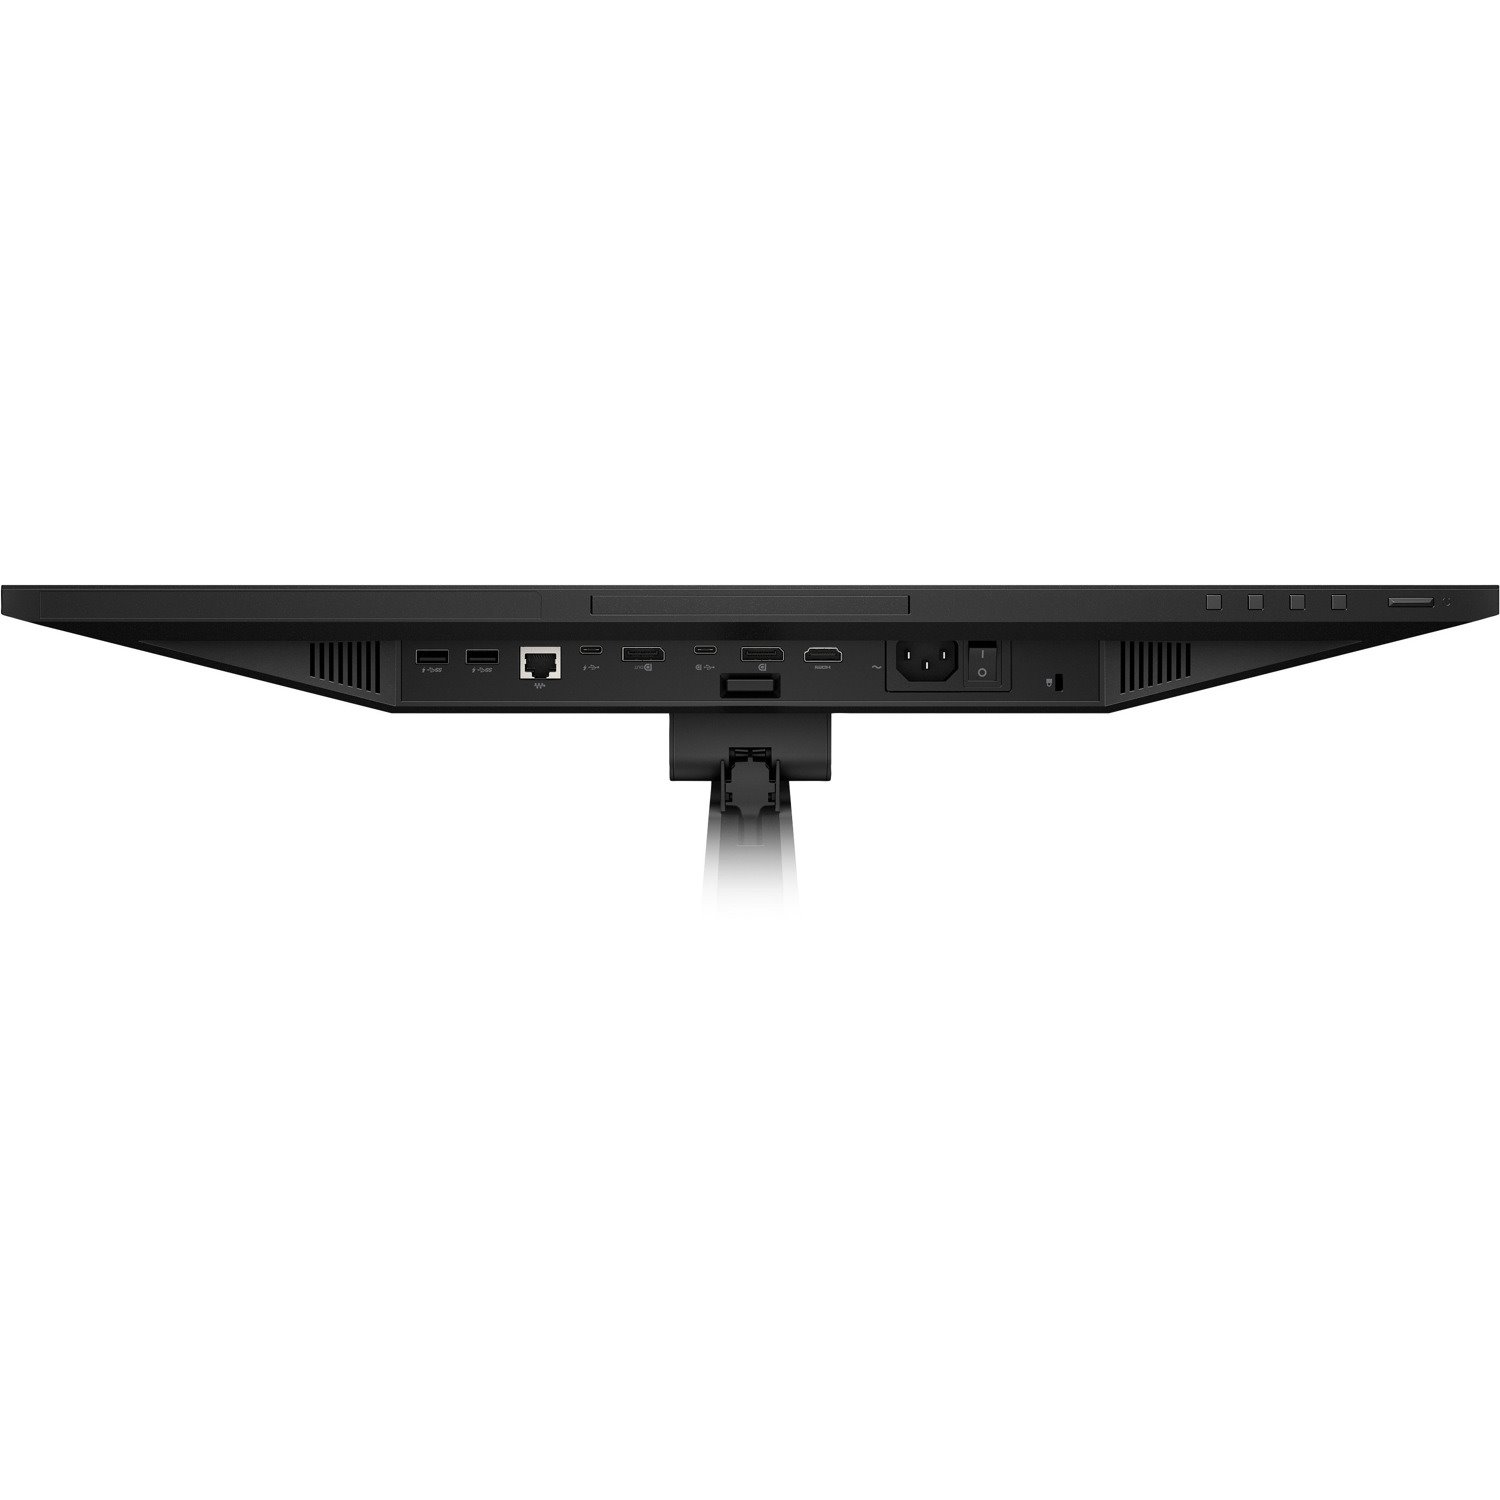 HP E24d G4 24" Class Webcam Full HD LCD Monitor - 16:9 - Black